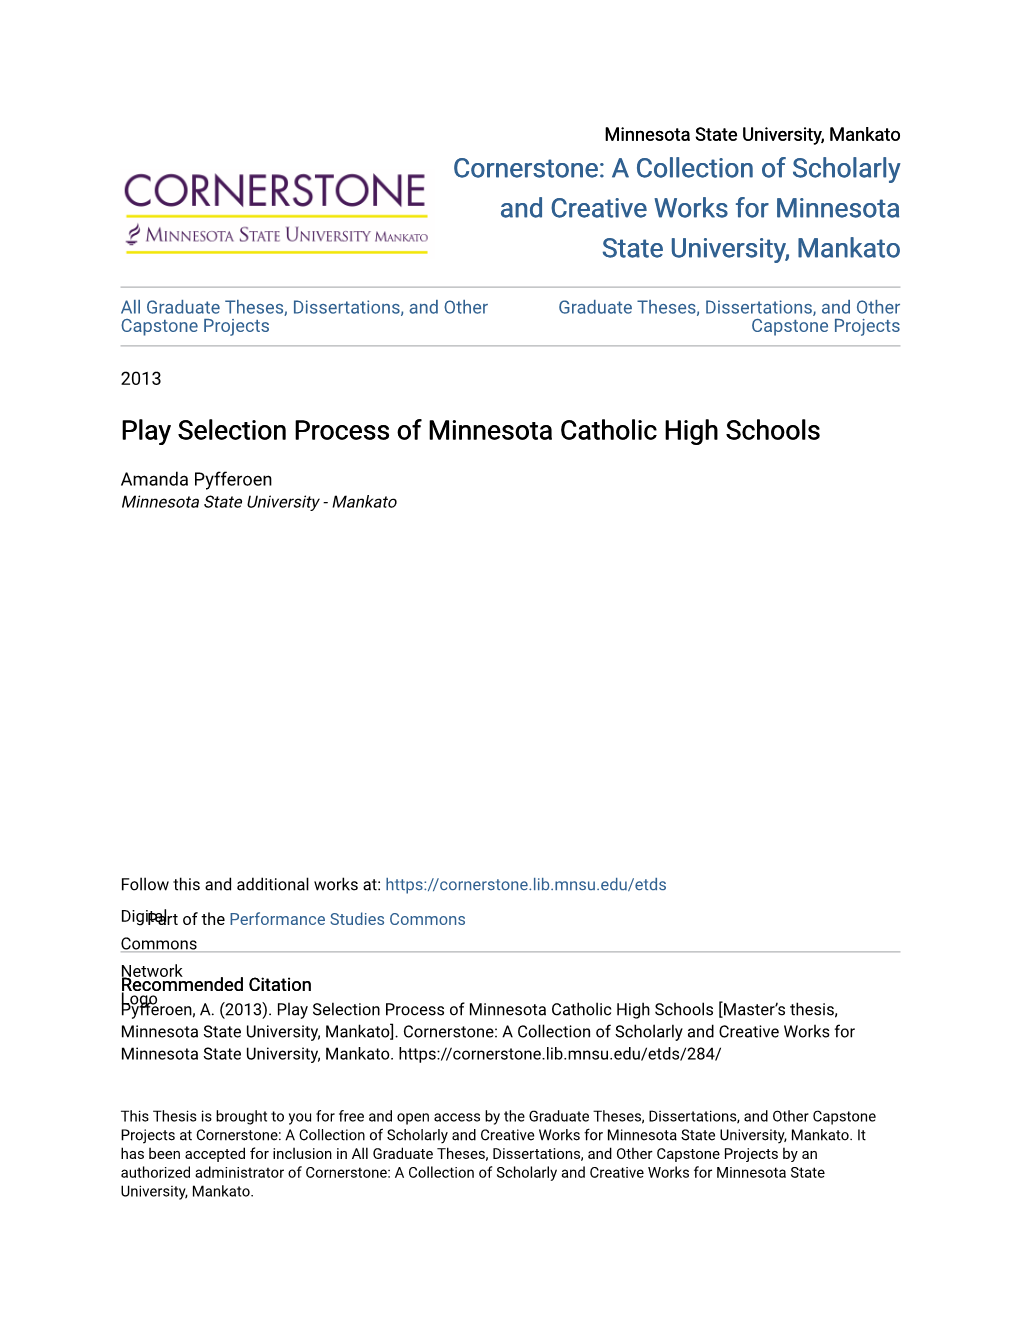 Play Selection Process of Minnesota Catholic High Schools